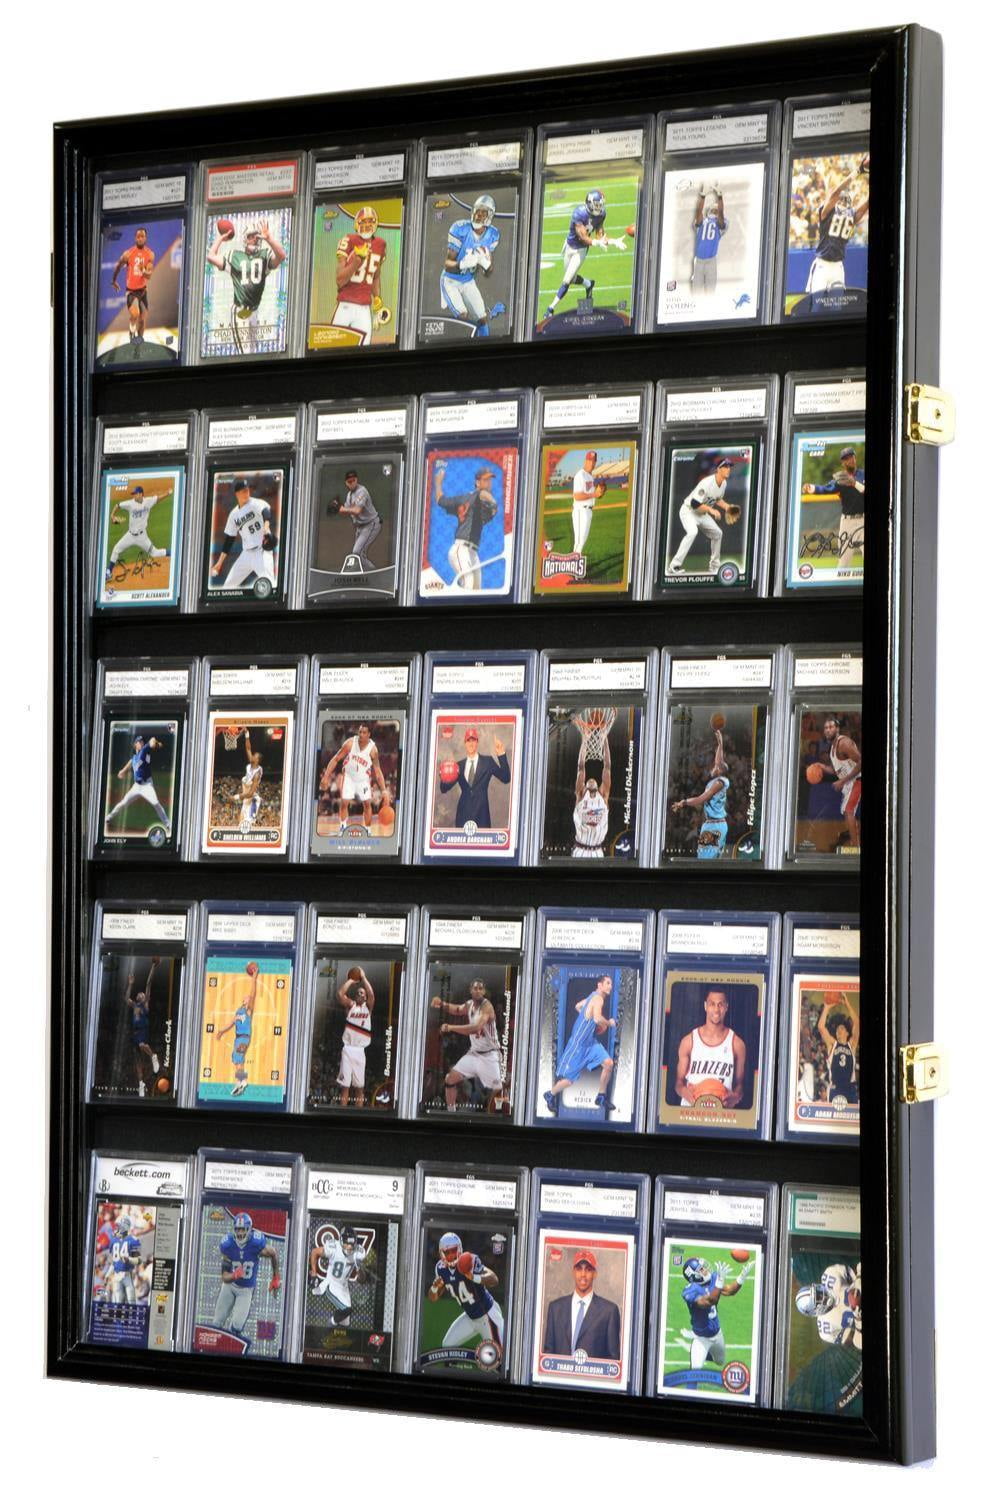 BGS Graded Card Display Frame - Wall Mount Baseball Trading Card Display